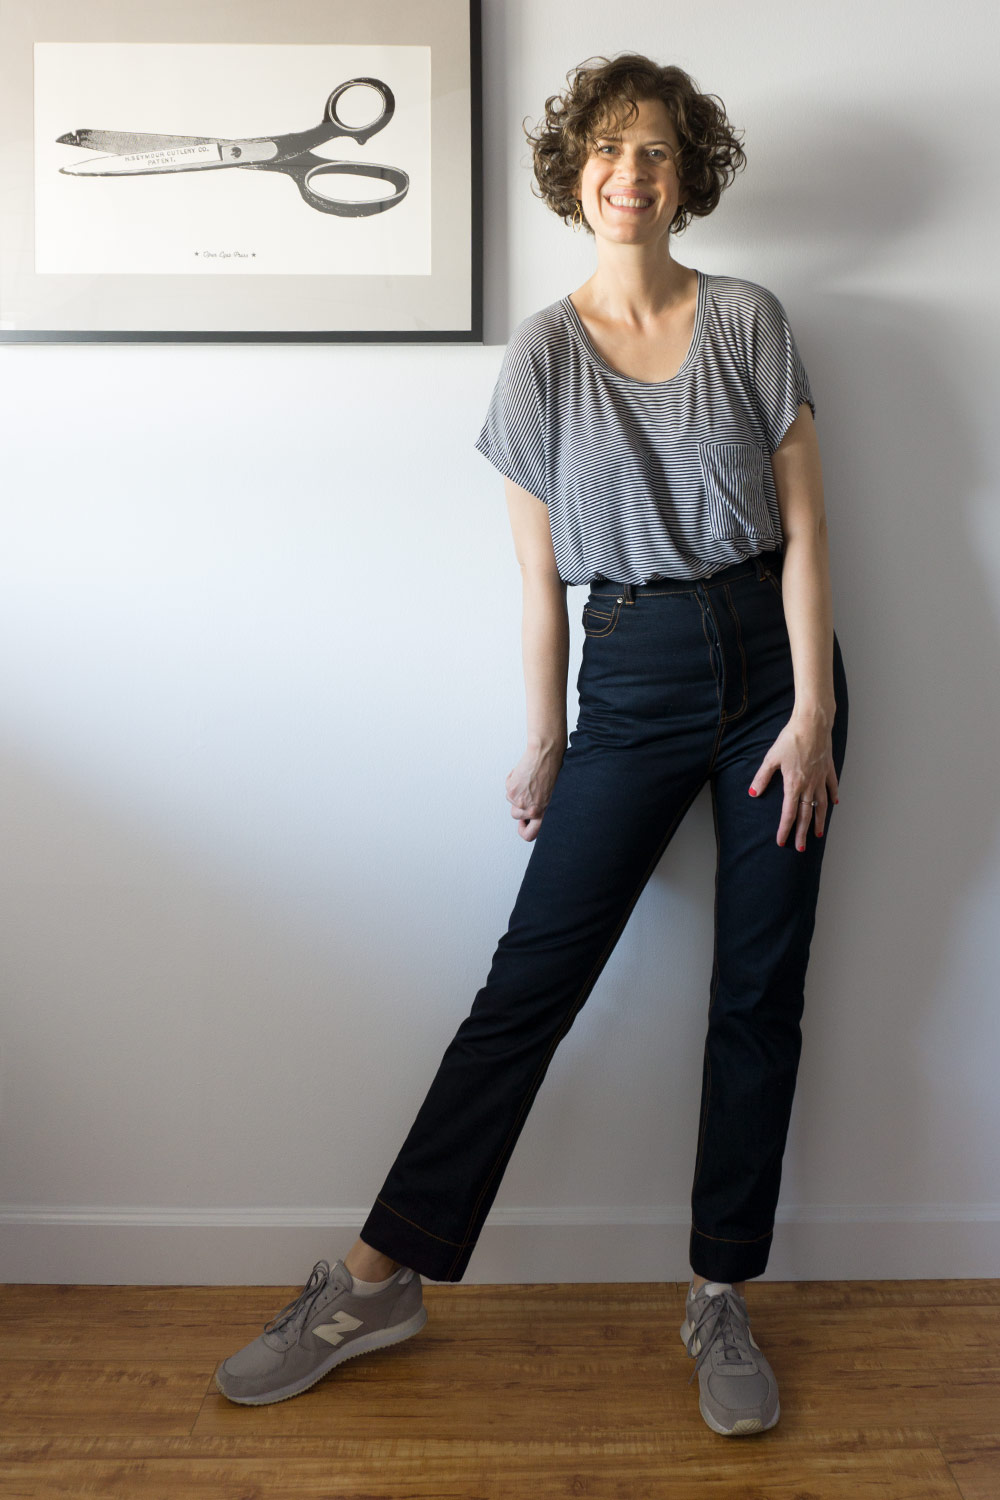 DIY High Rise Rigid Jeans - Megan Nielsen Dawn Jeans — Sew DIY